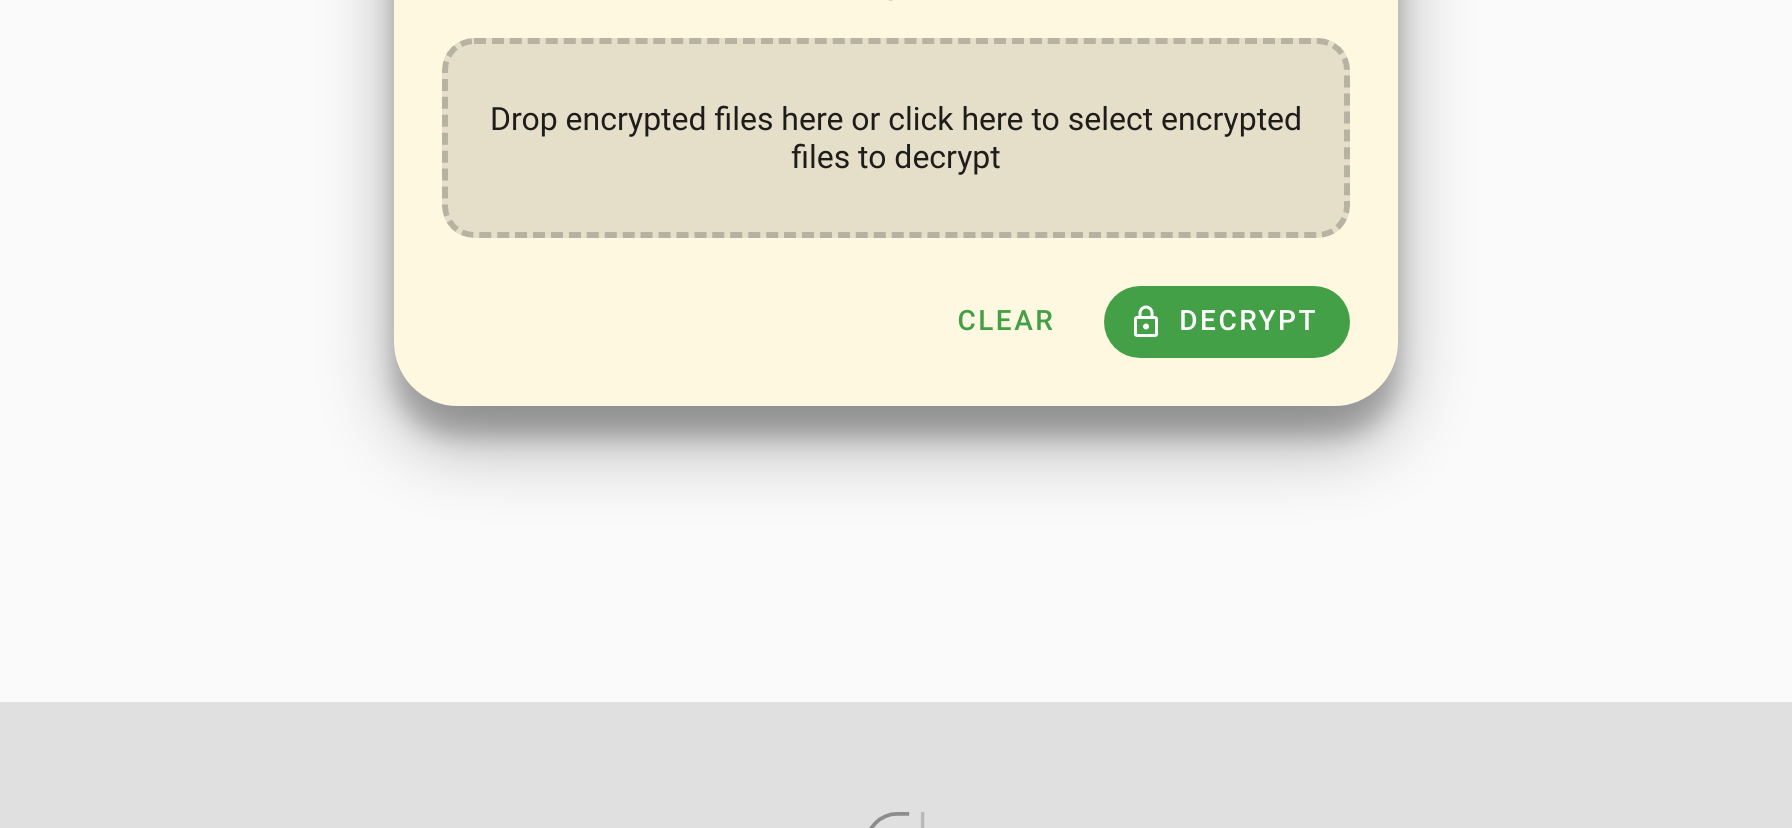 main-test-ts-encrypt-decrypt-decrypt-page-file-decryption-screenshot-896-414-1-snap.png